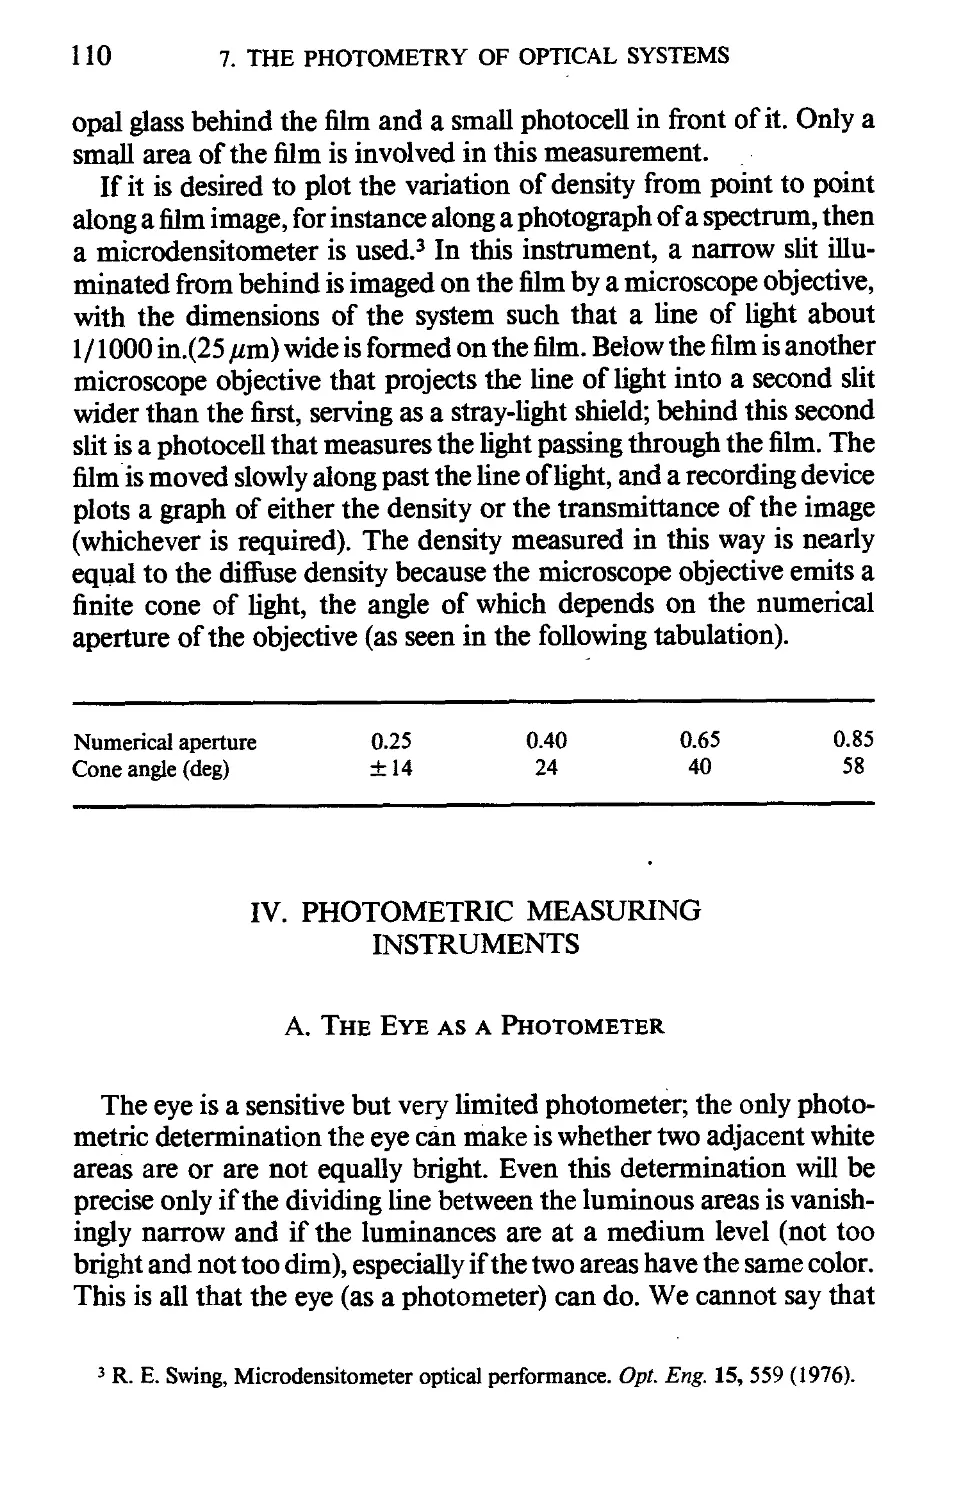 IV. Photometric Measuring Instruments